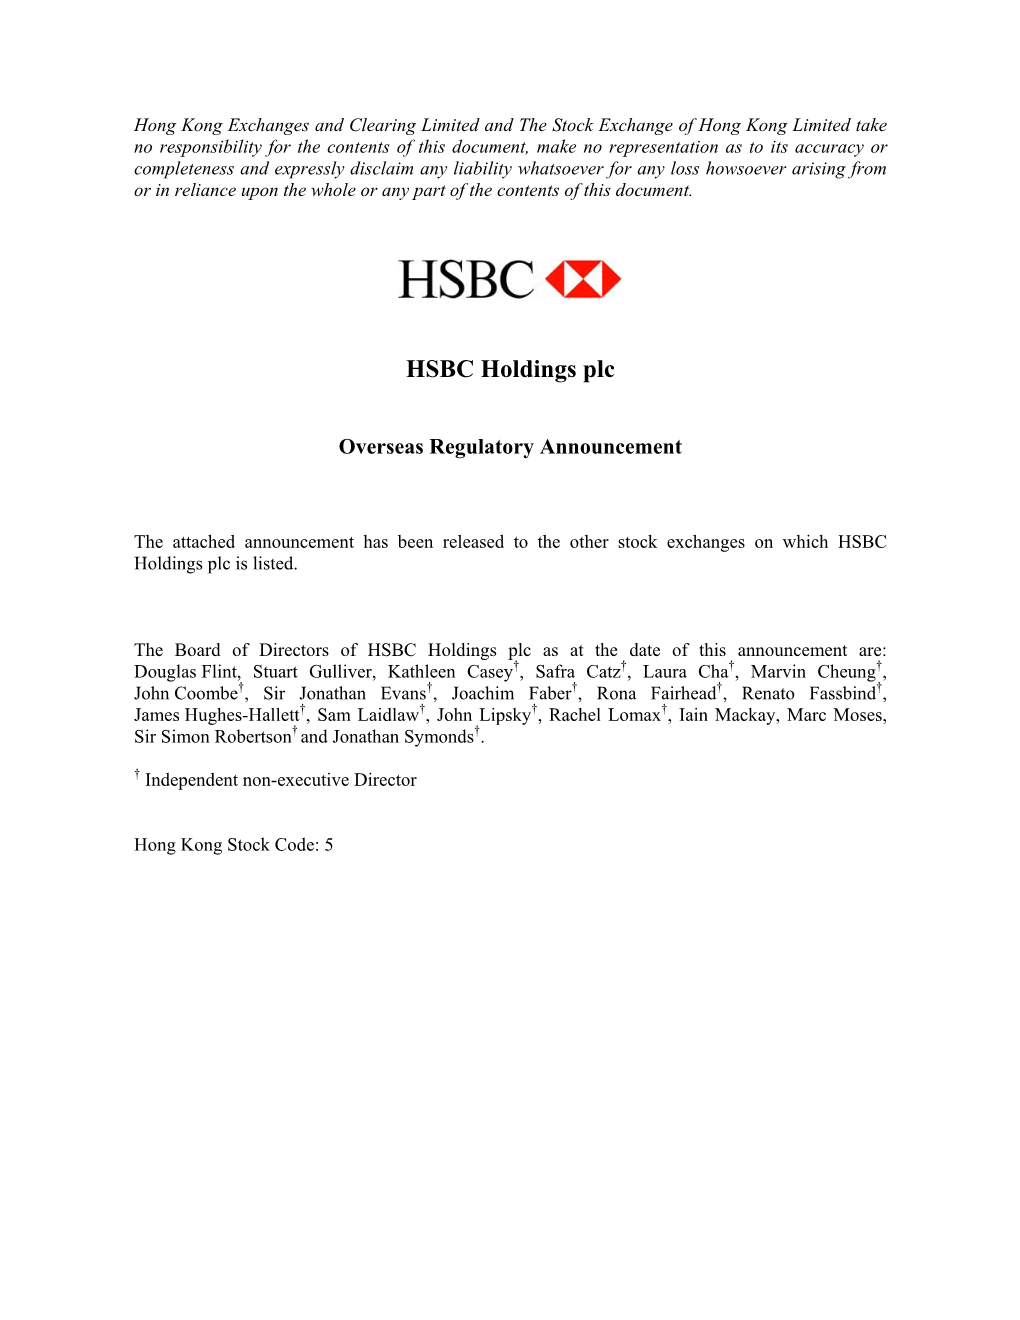 HSBC Holdings Plc